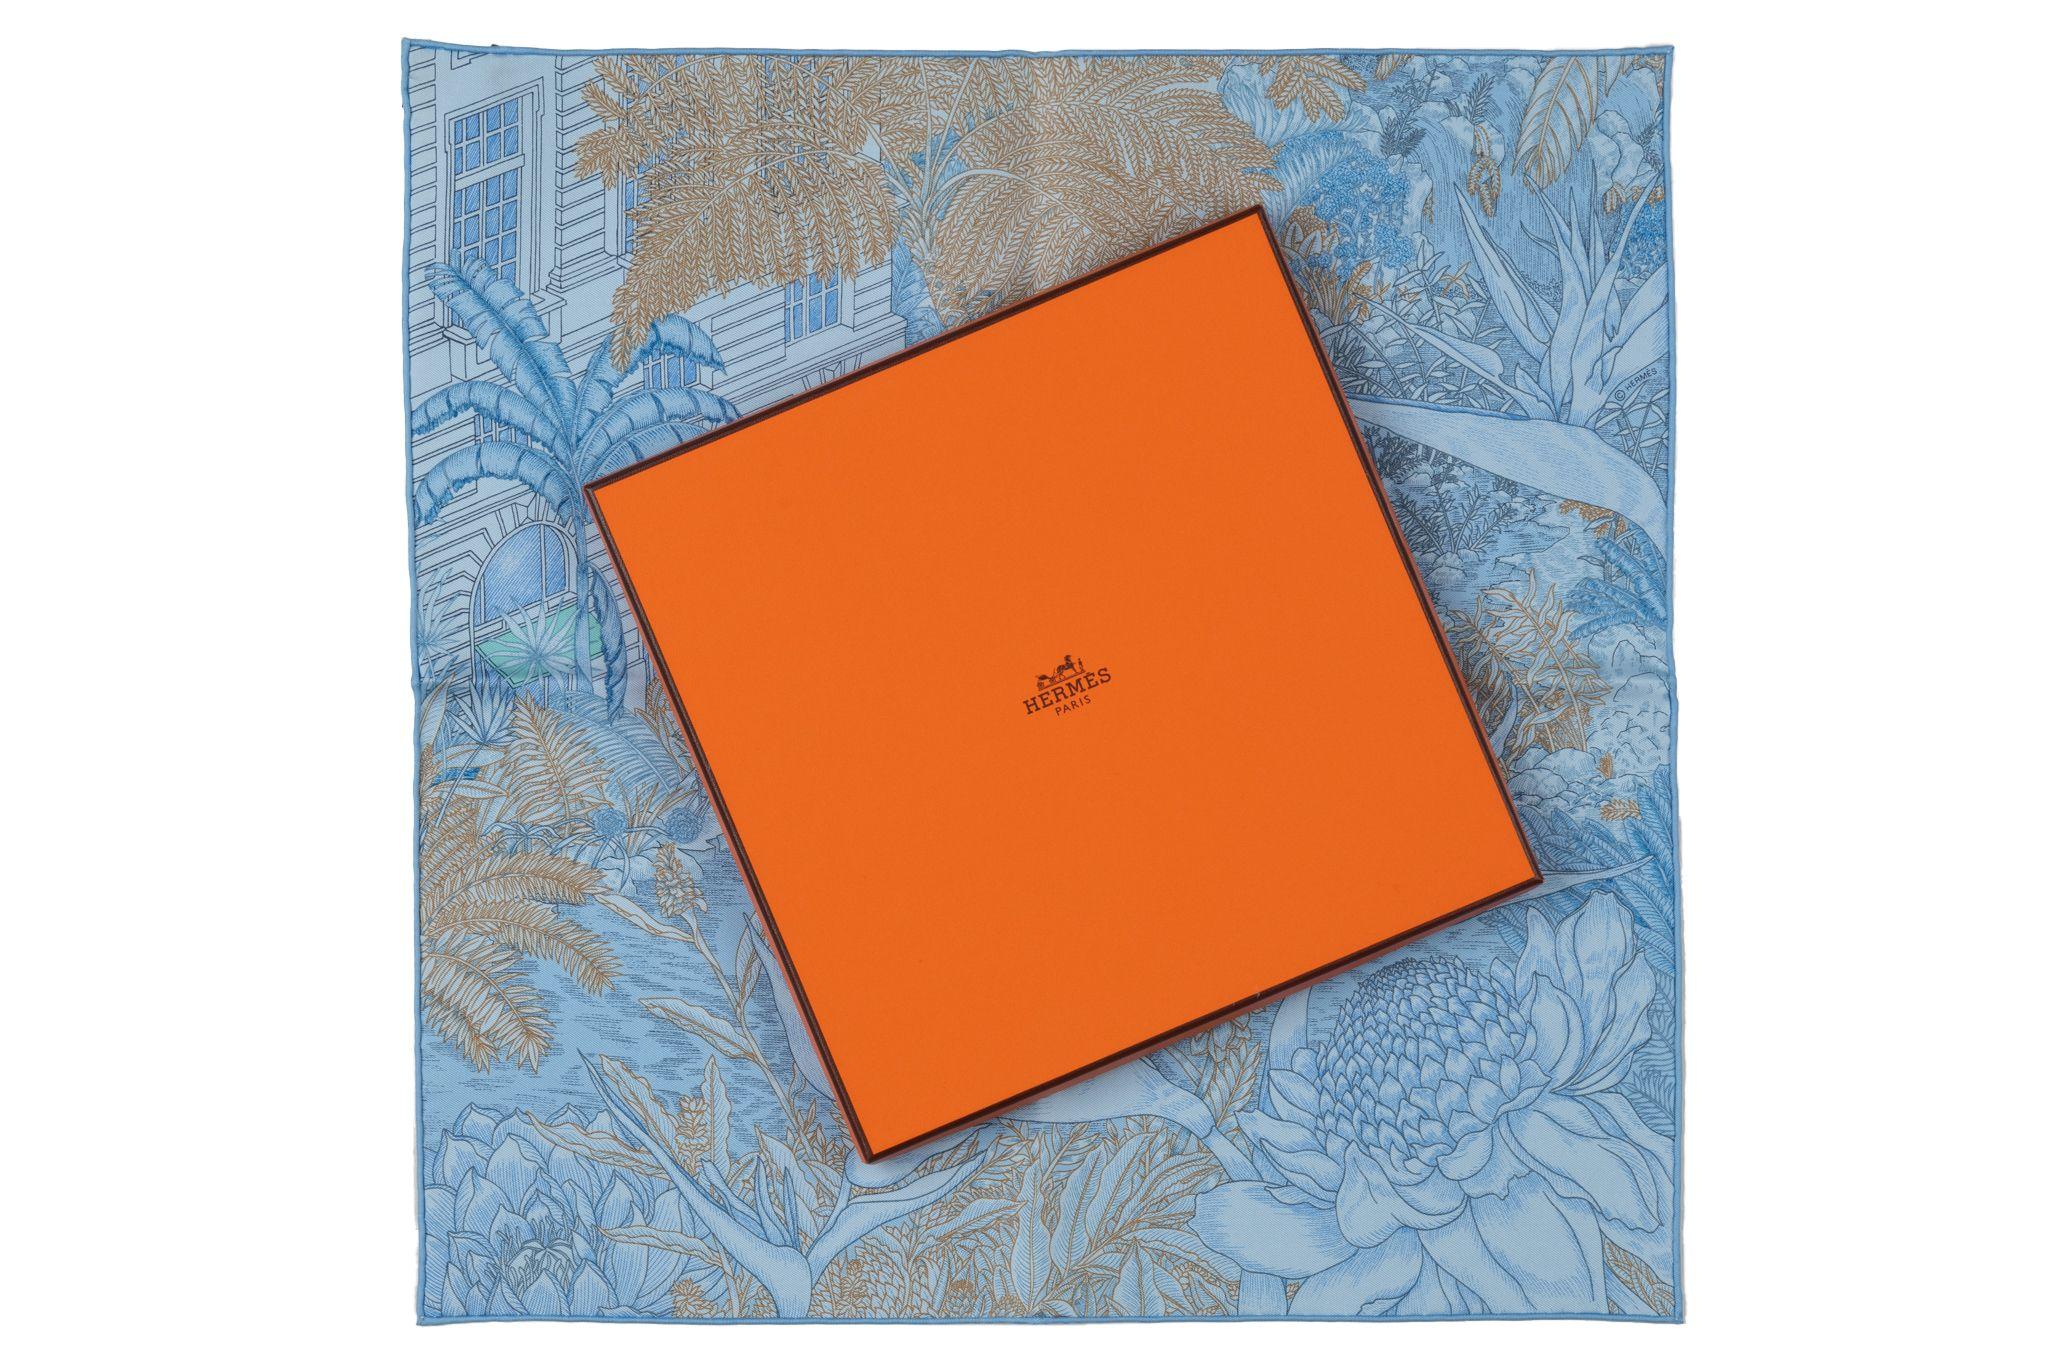 Hermès brand new in box tropical garden blue silk gavroche. Hand-rolled edges.